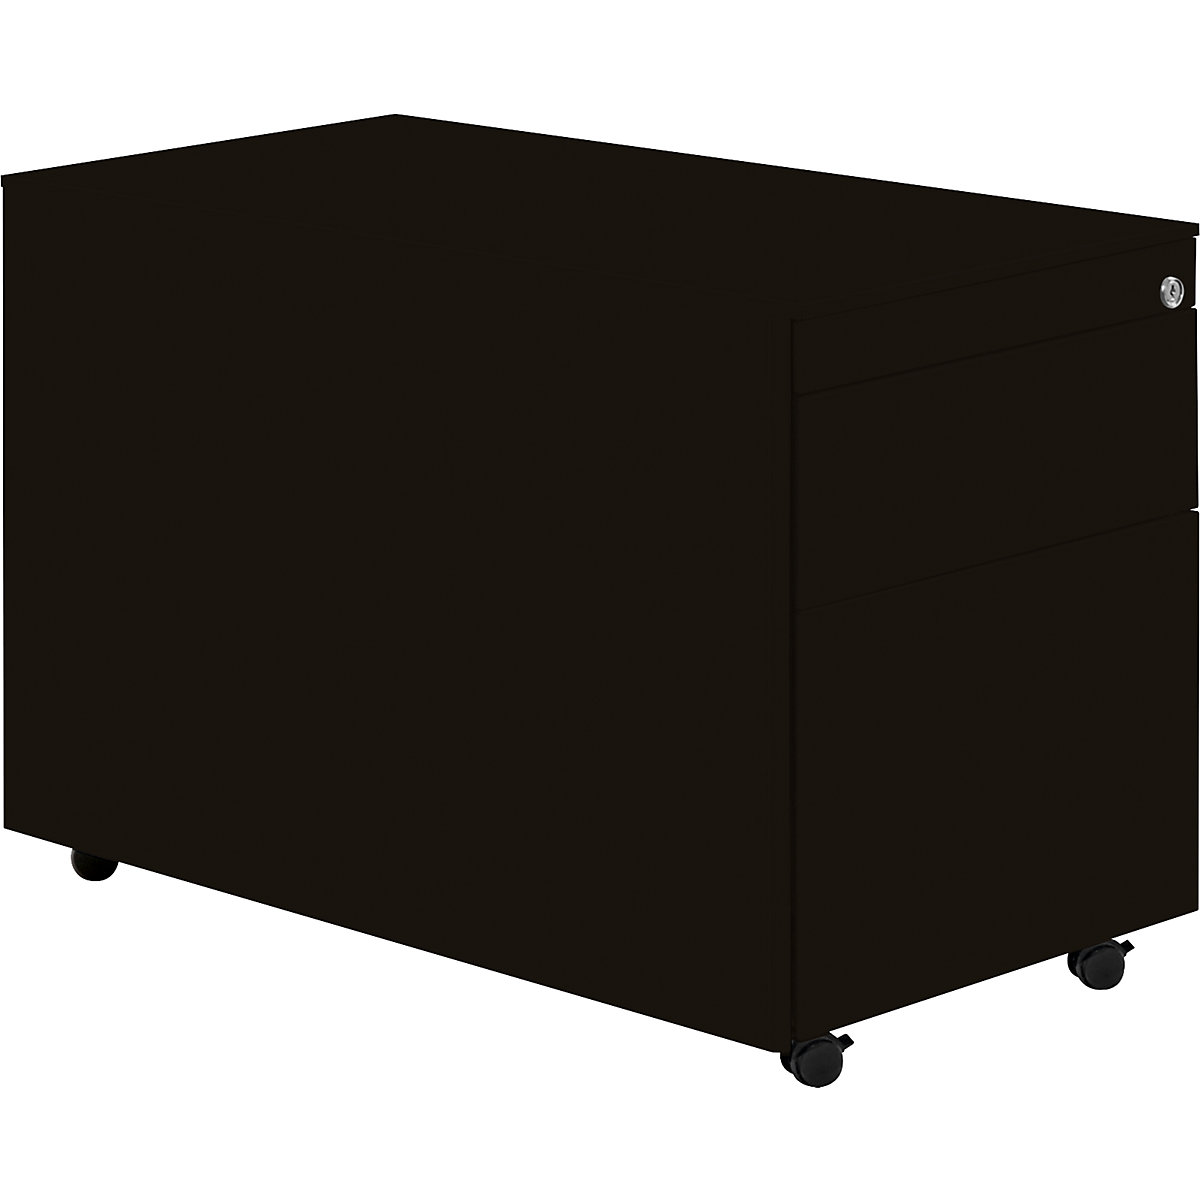 Buck rodante – mauser, H x P 570 x 800 mm, 1 cajón para material, 1 archivador colgante, negro grafito / negro grafito / negro grafito-10